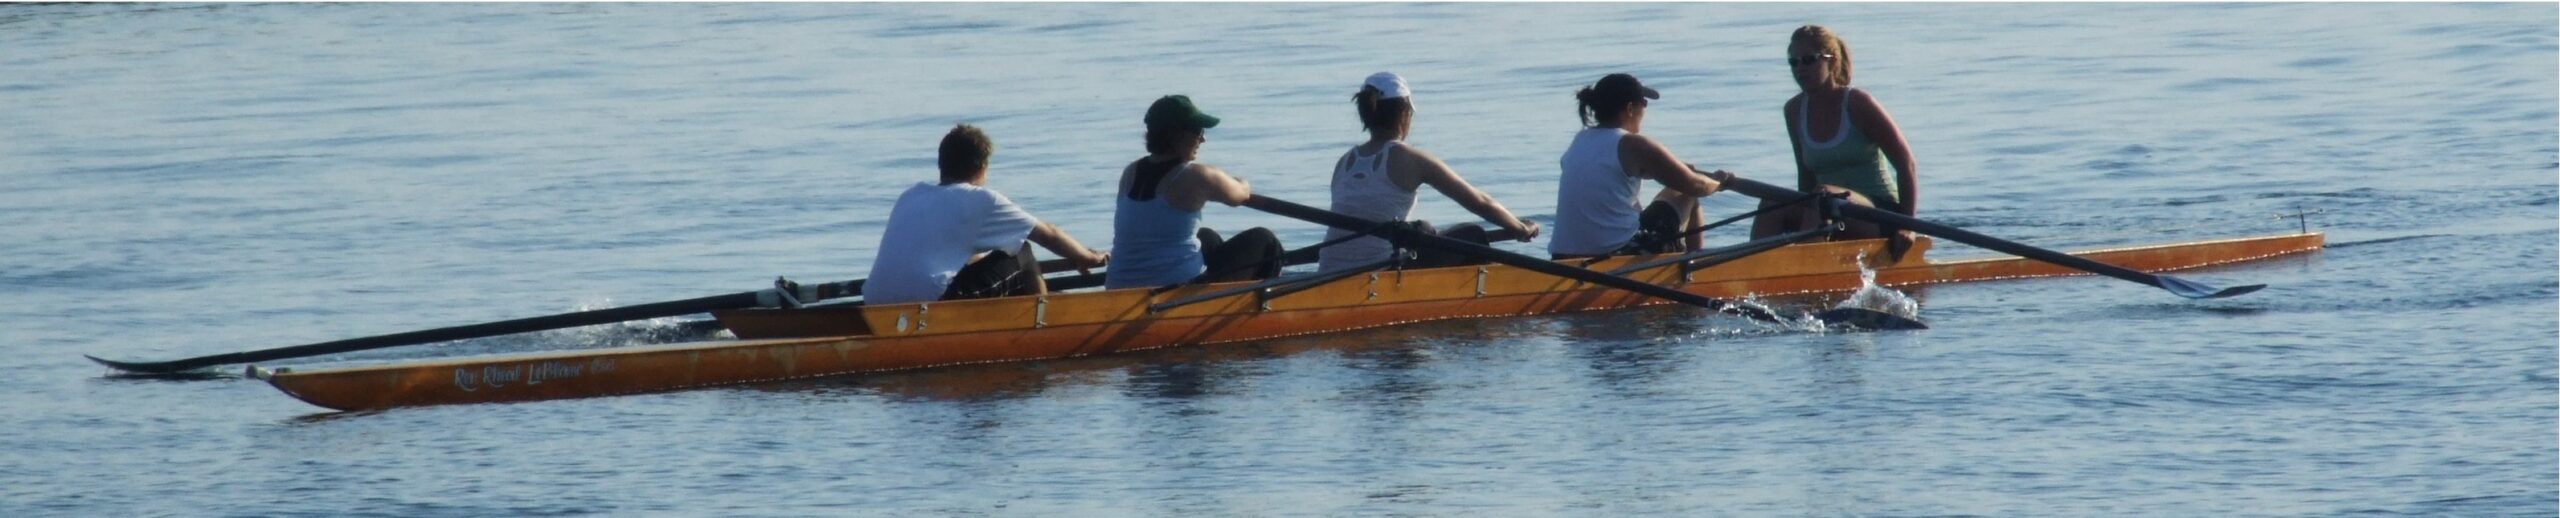 Toronto female rowing team